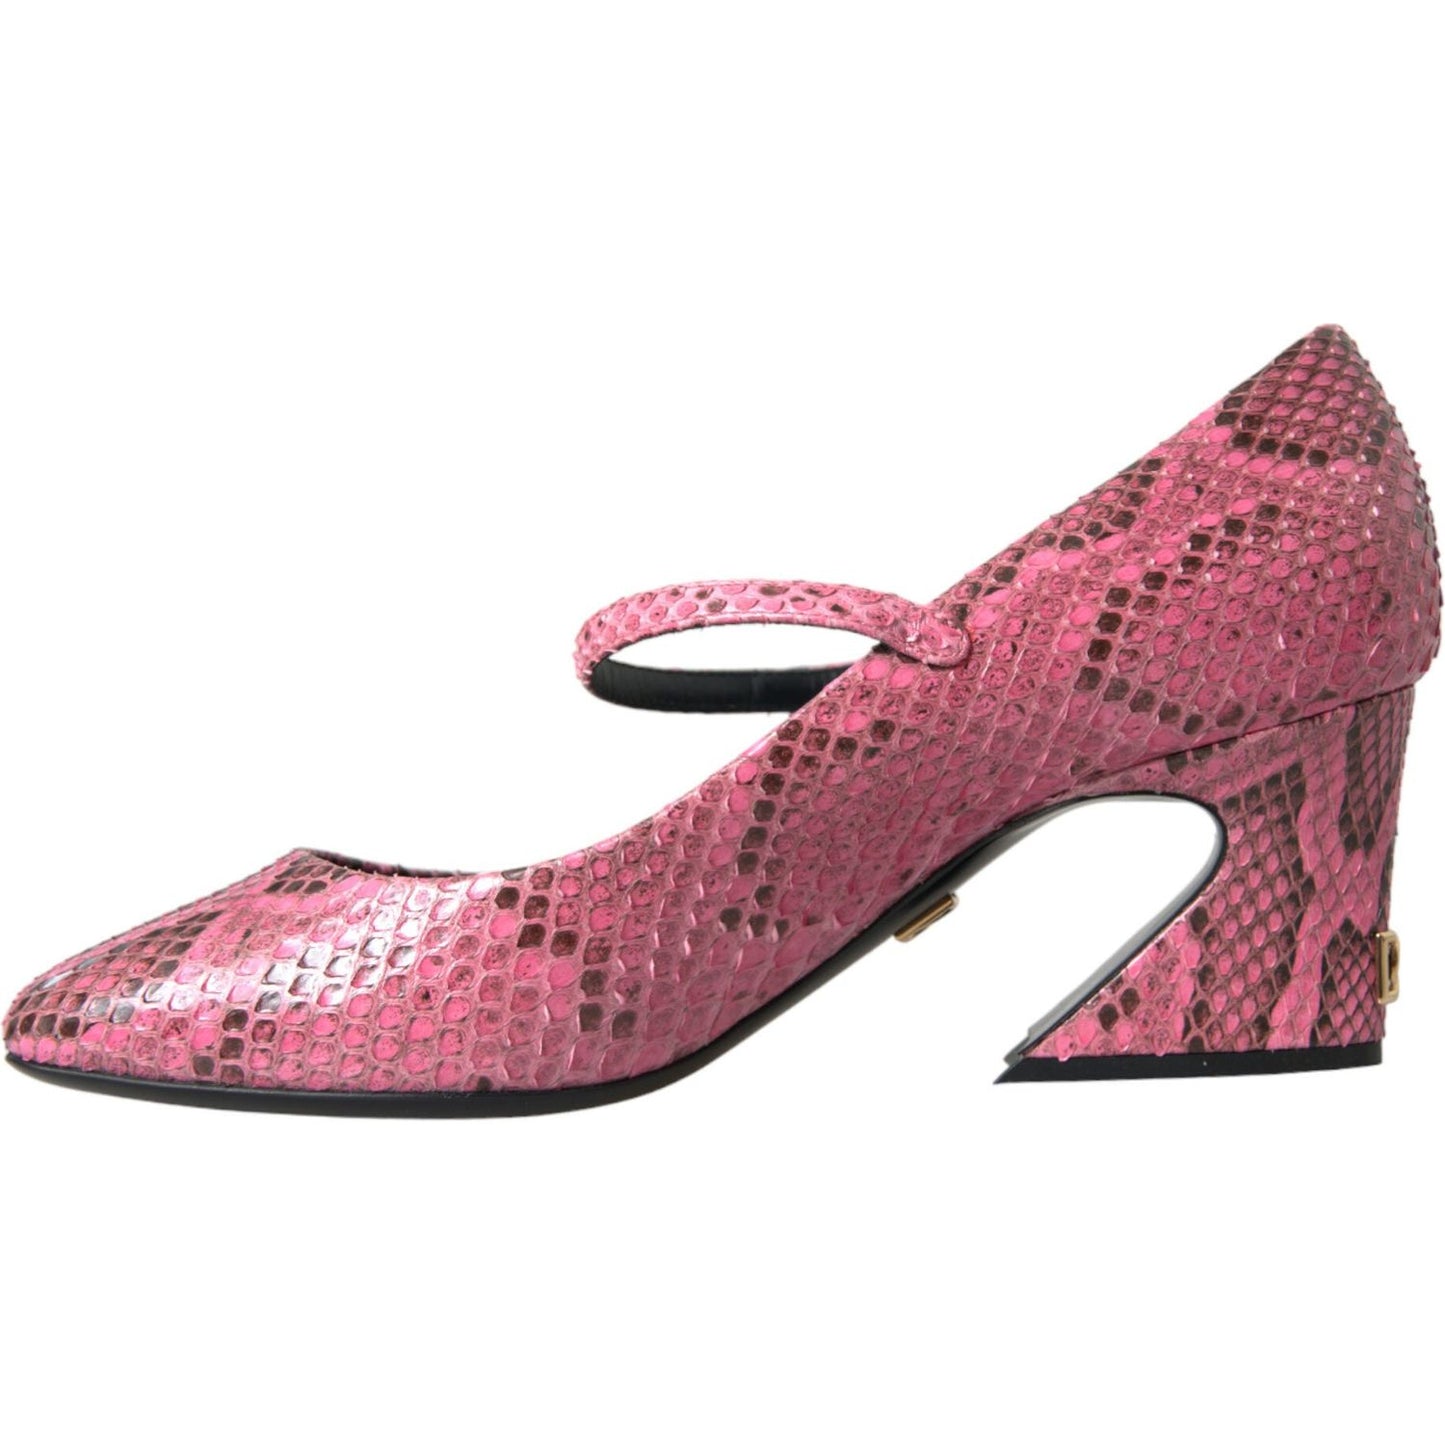 Dolce & Gabbana Pink Python Leather Mary Jane Heels Shoes pink-python-leather-mary-jane-heels-shoes